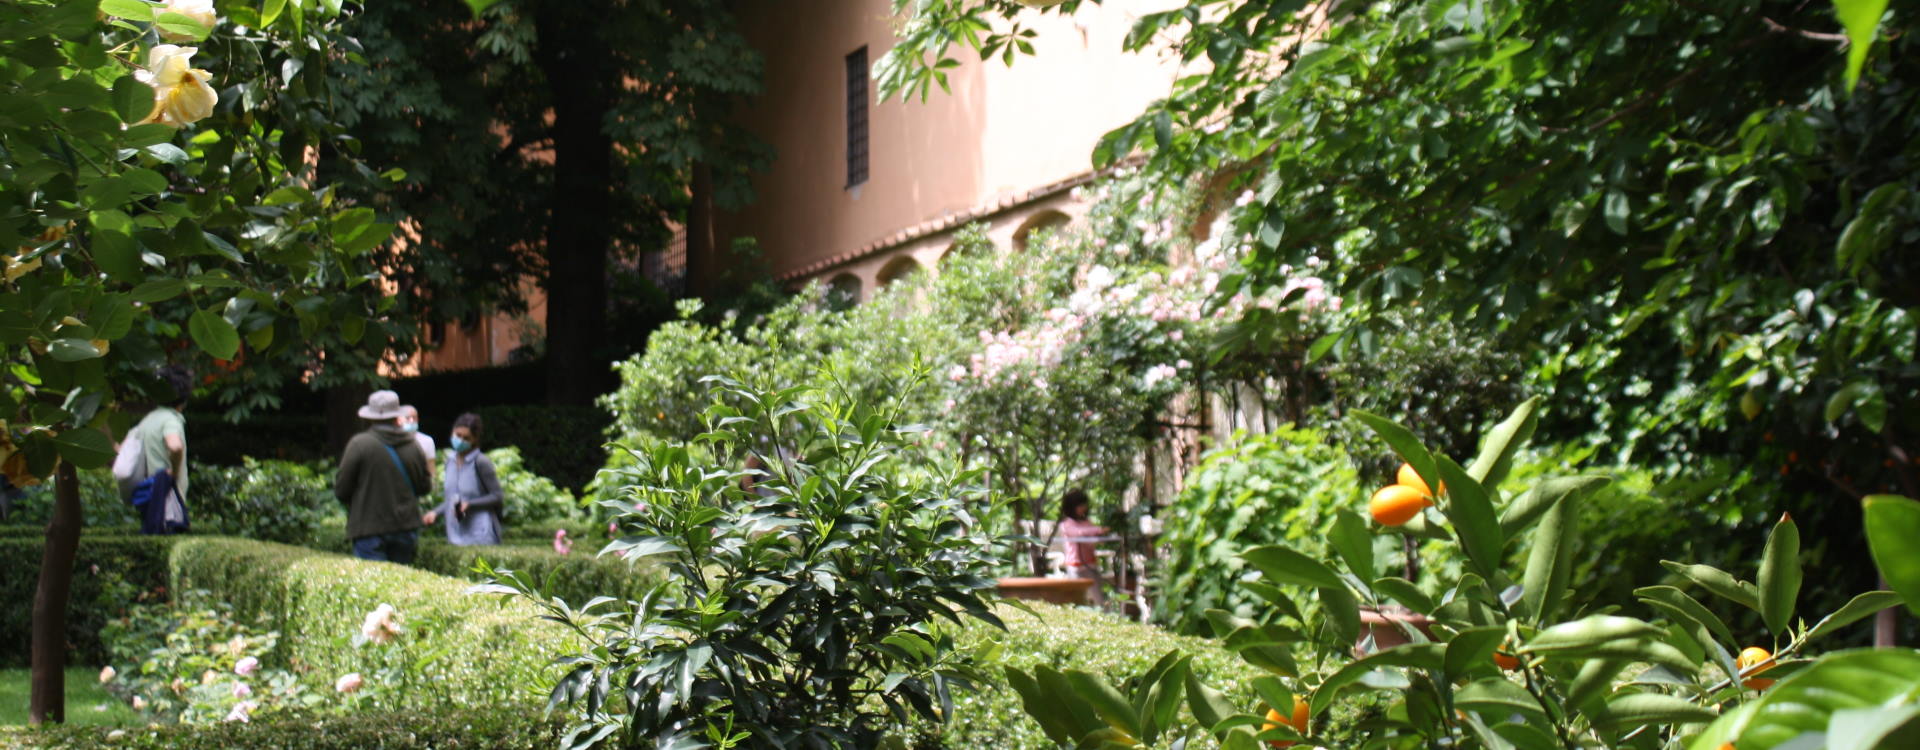 Diverdeinverde - foto di Margherita Palmieri